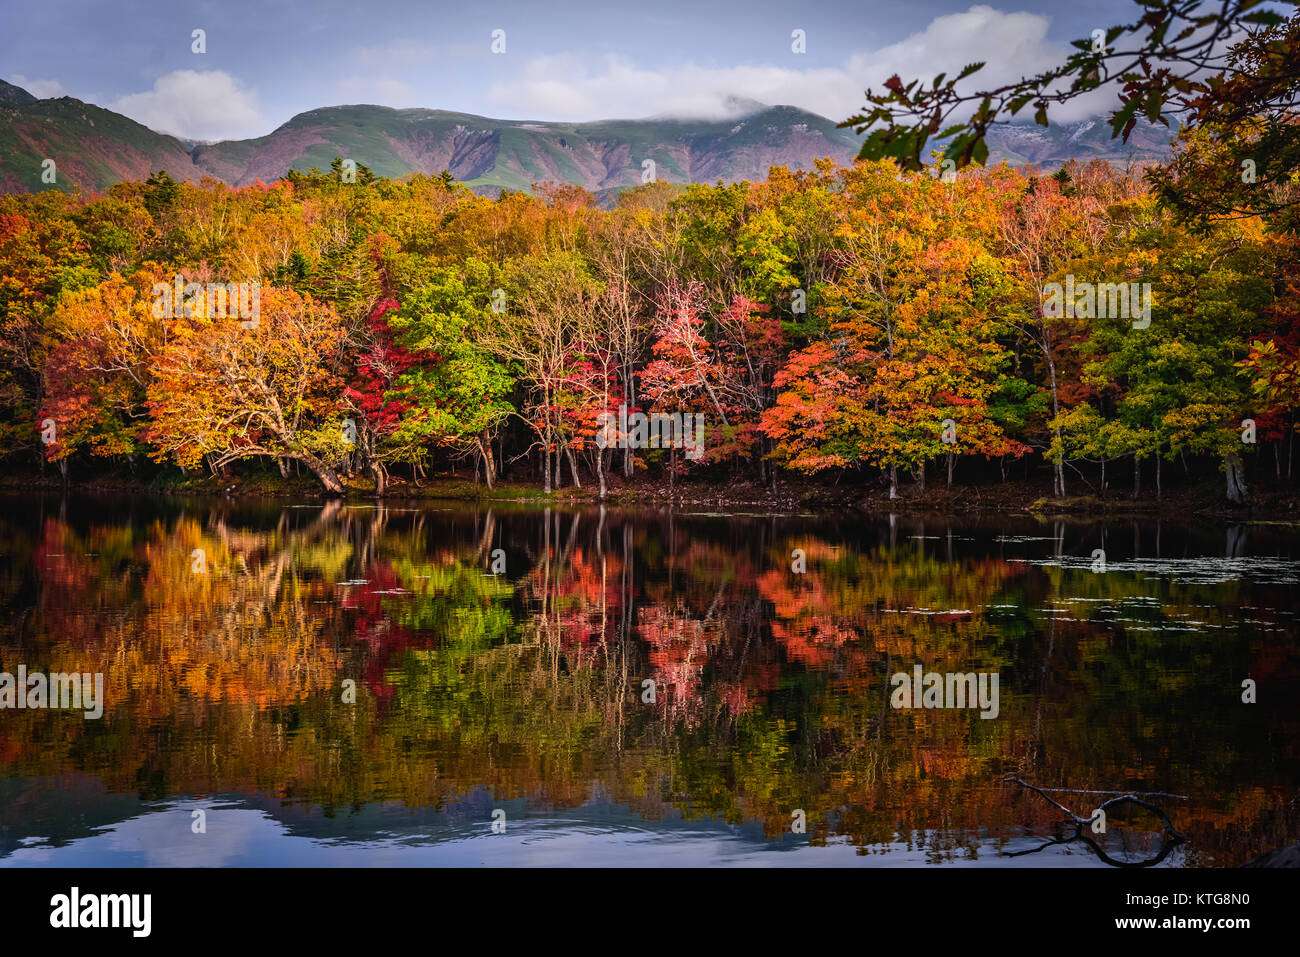 The autumn colors reflected in a lake at Shiretoko, Hokkaido, Japan Stock Photo